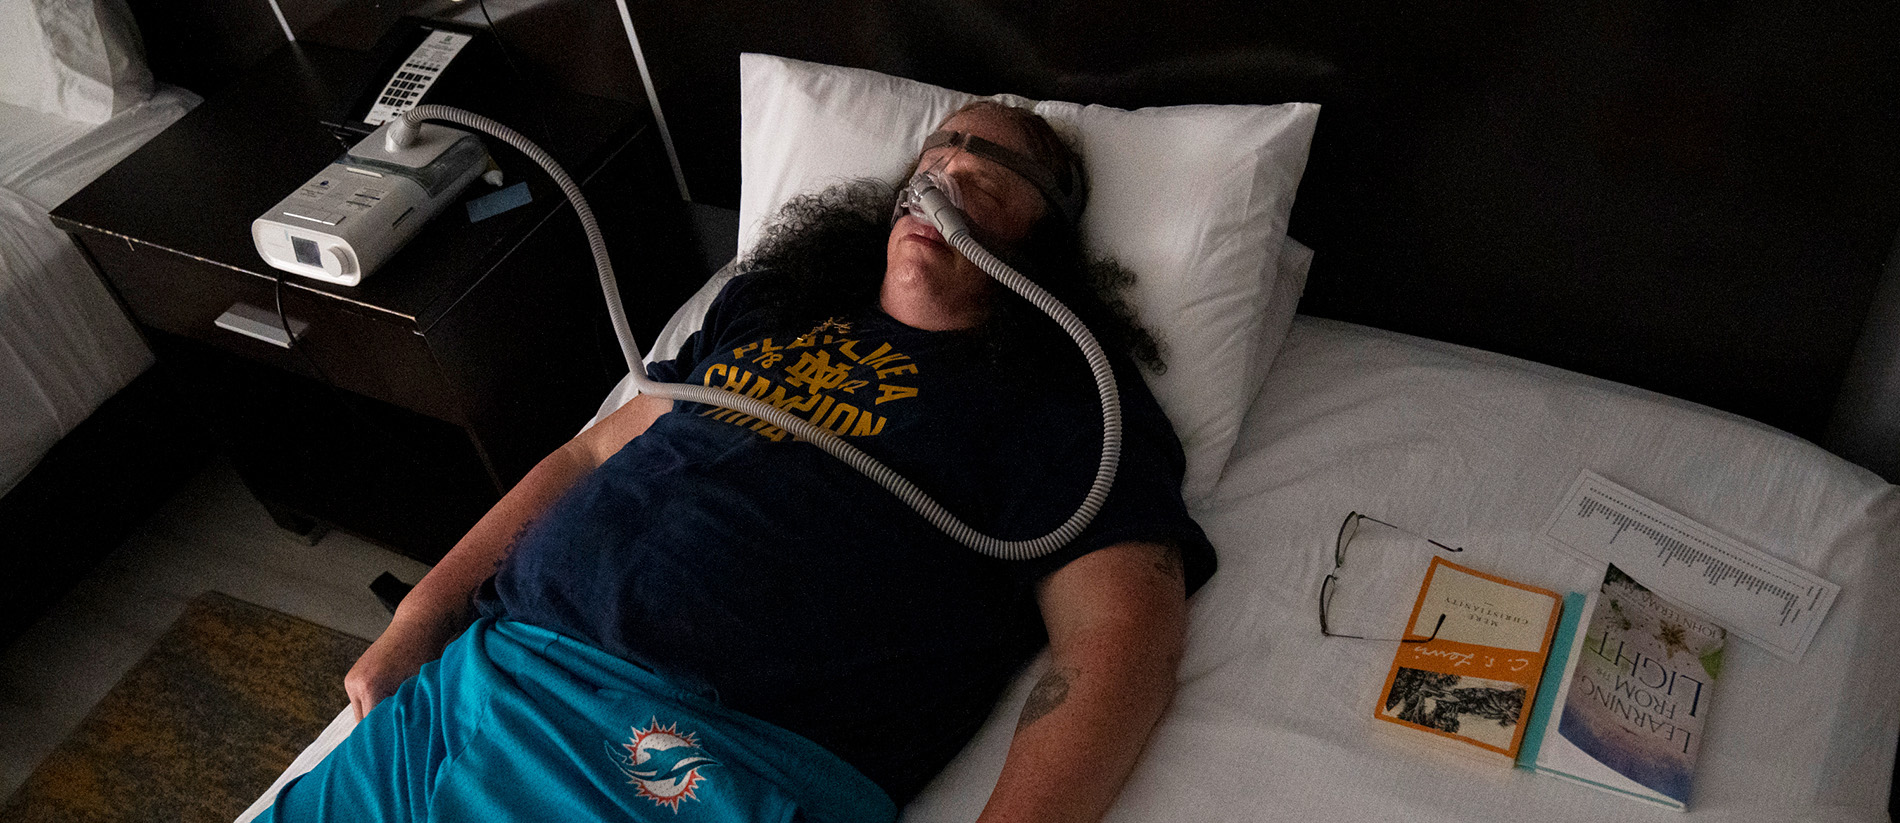 Philips' U.S. sales of sleep apnea devices face years-long halt after FDA  deal